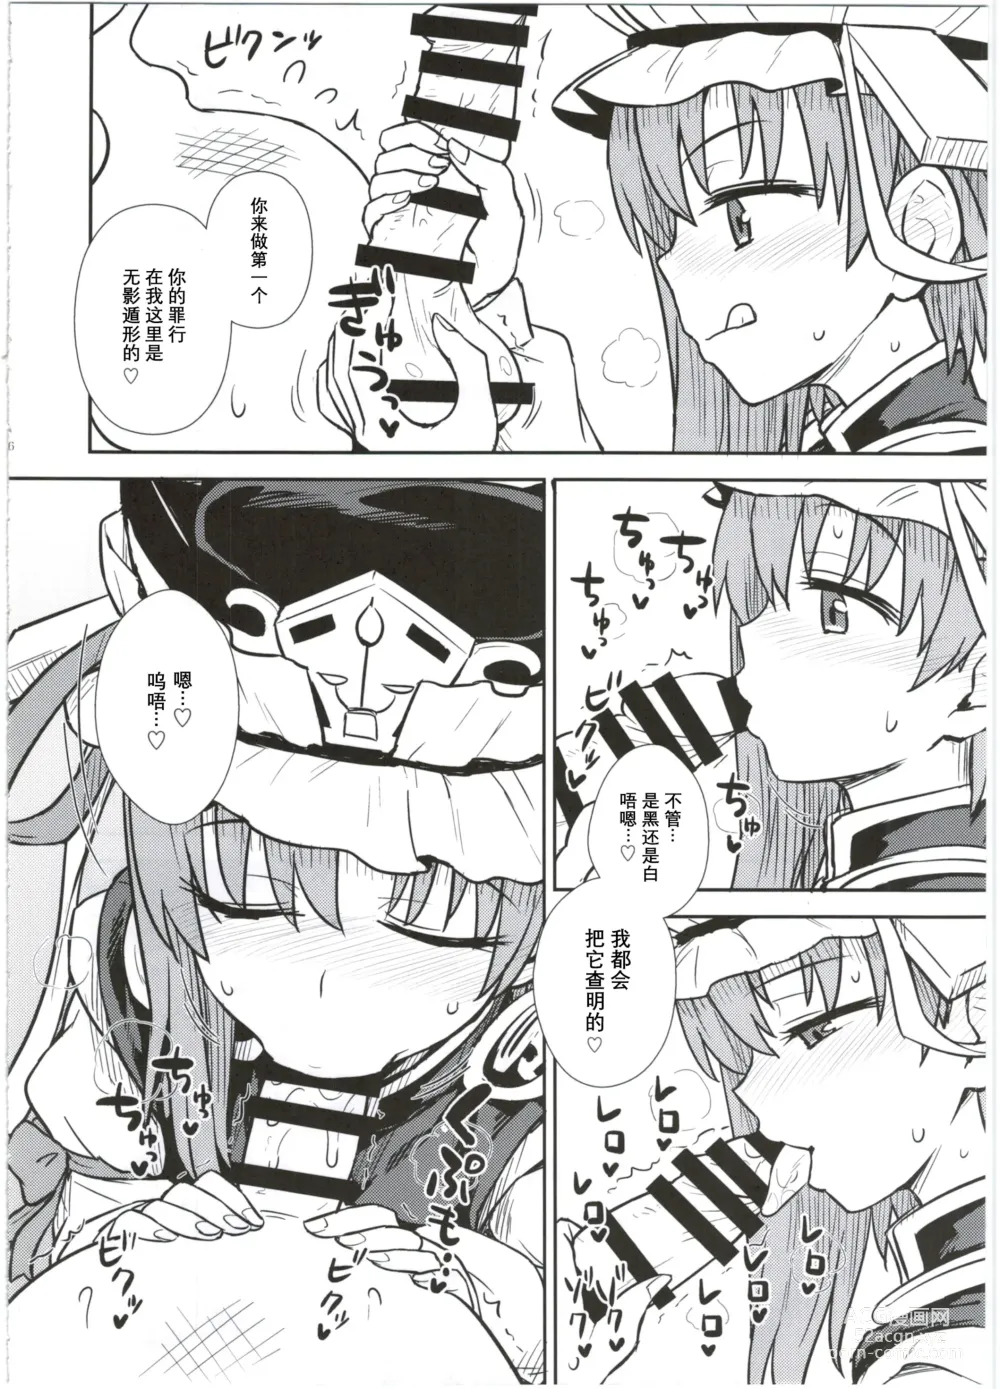 Page 7 of doujinshi 映姬大人的舌口裁判